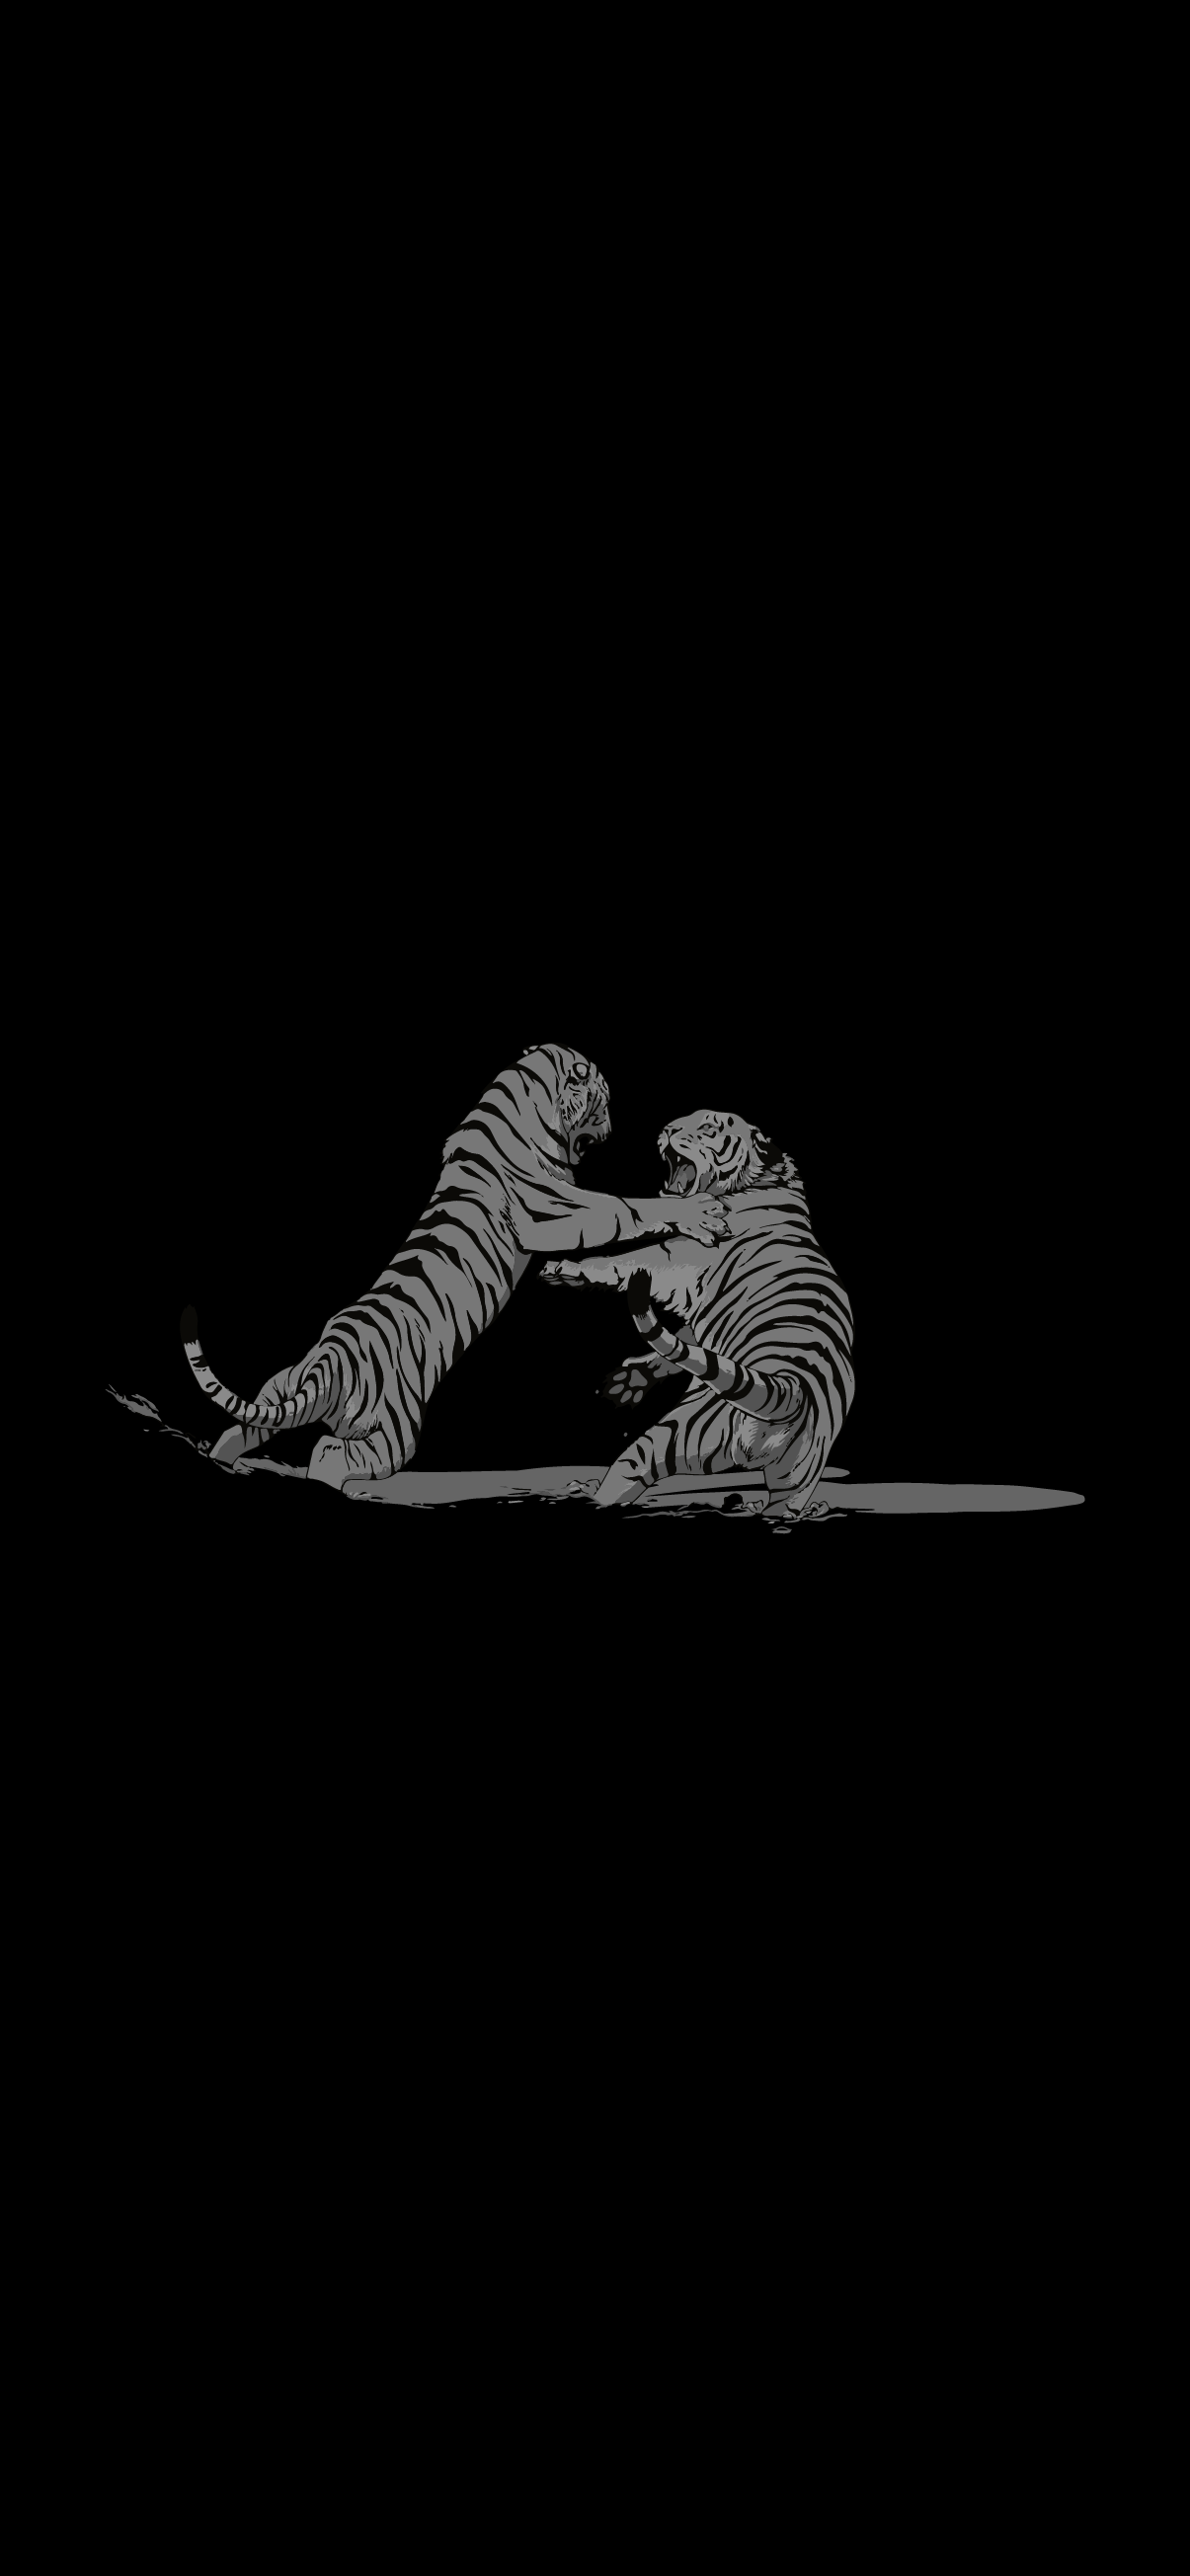 Black amoled wallpaper - Tiger